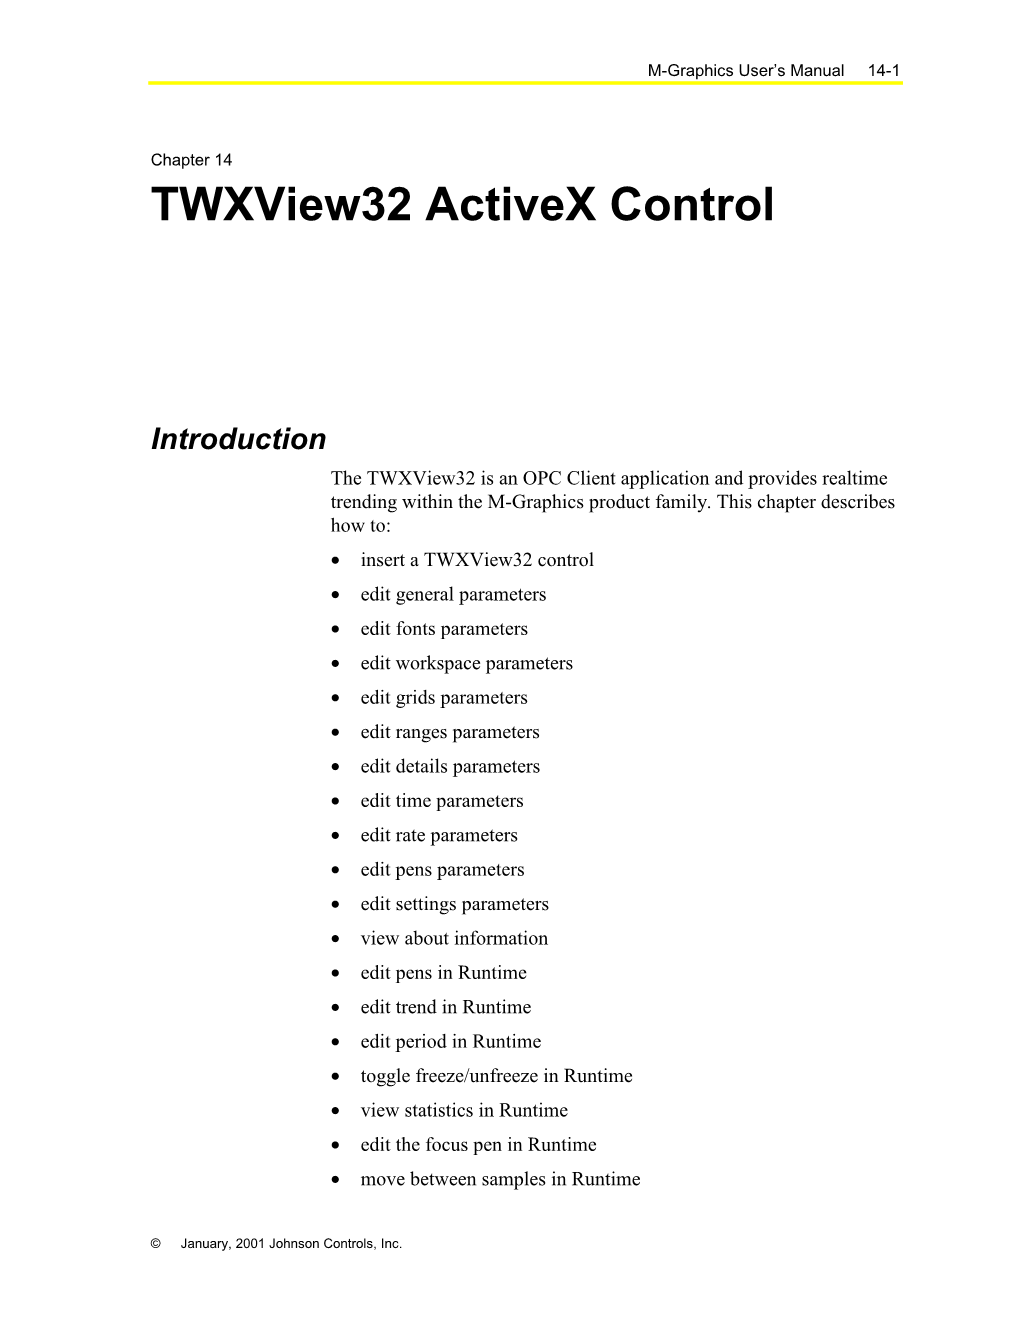 Chapter 14 Twxview32 Activex Control